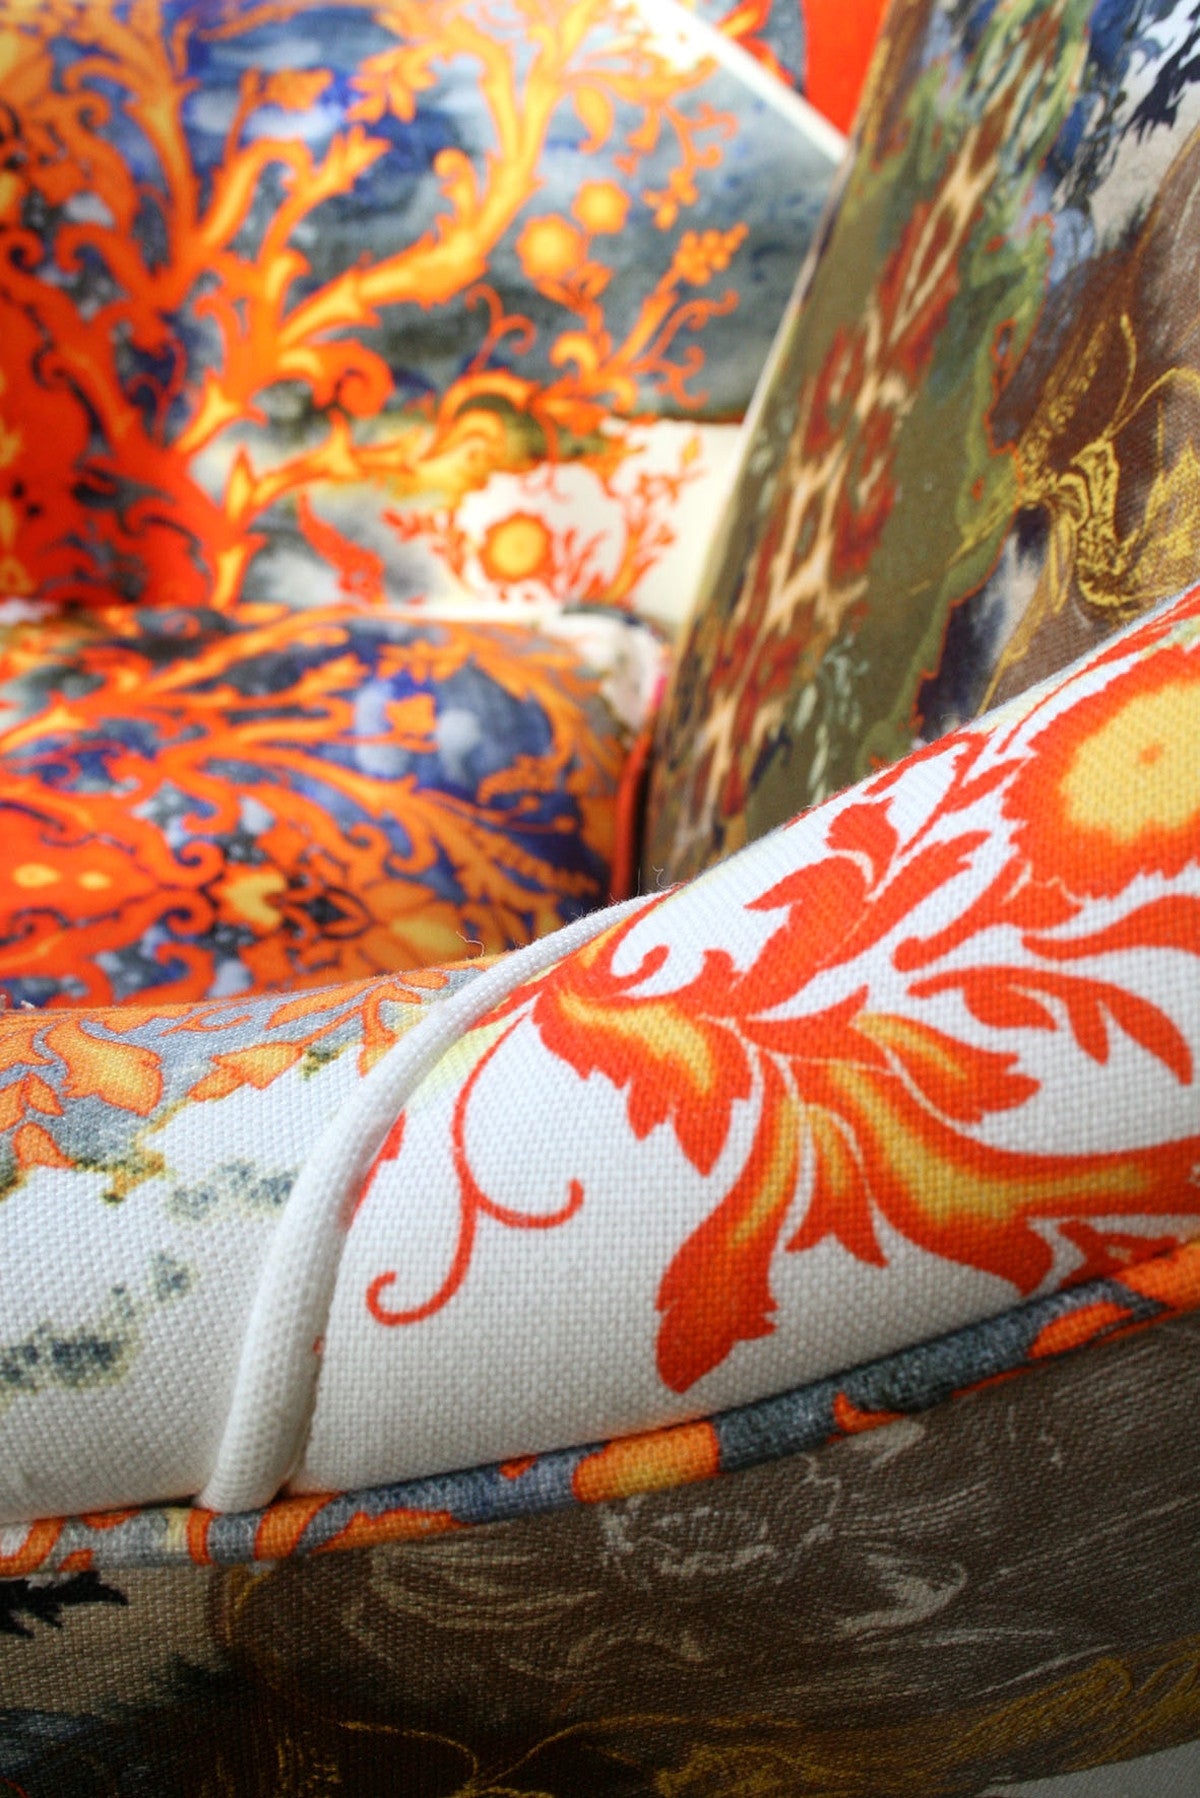 grand blotch damask fabric by timorous beasties on adorn.house